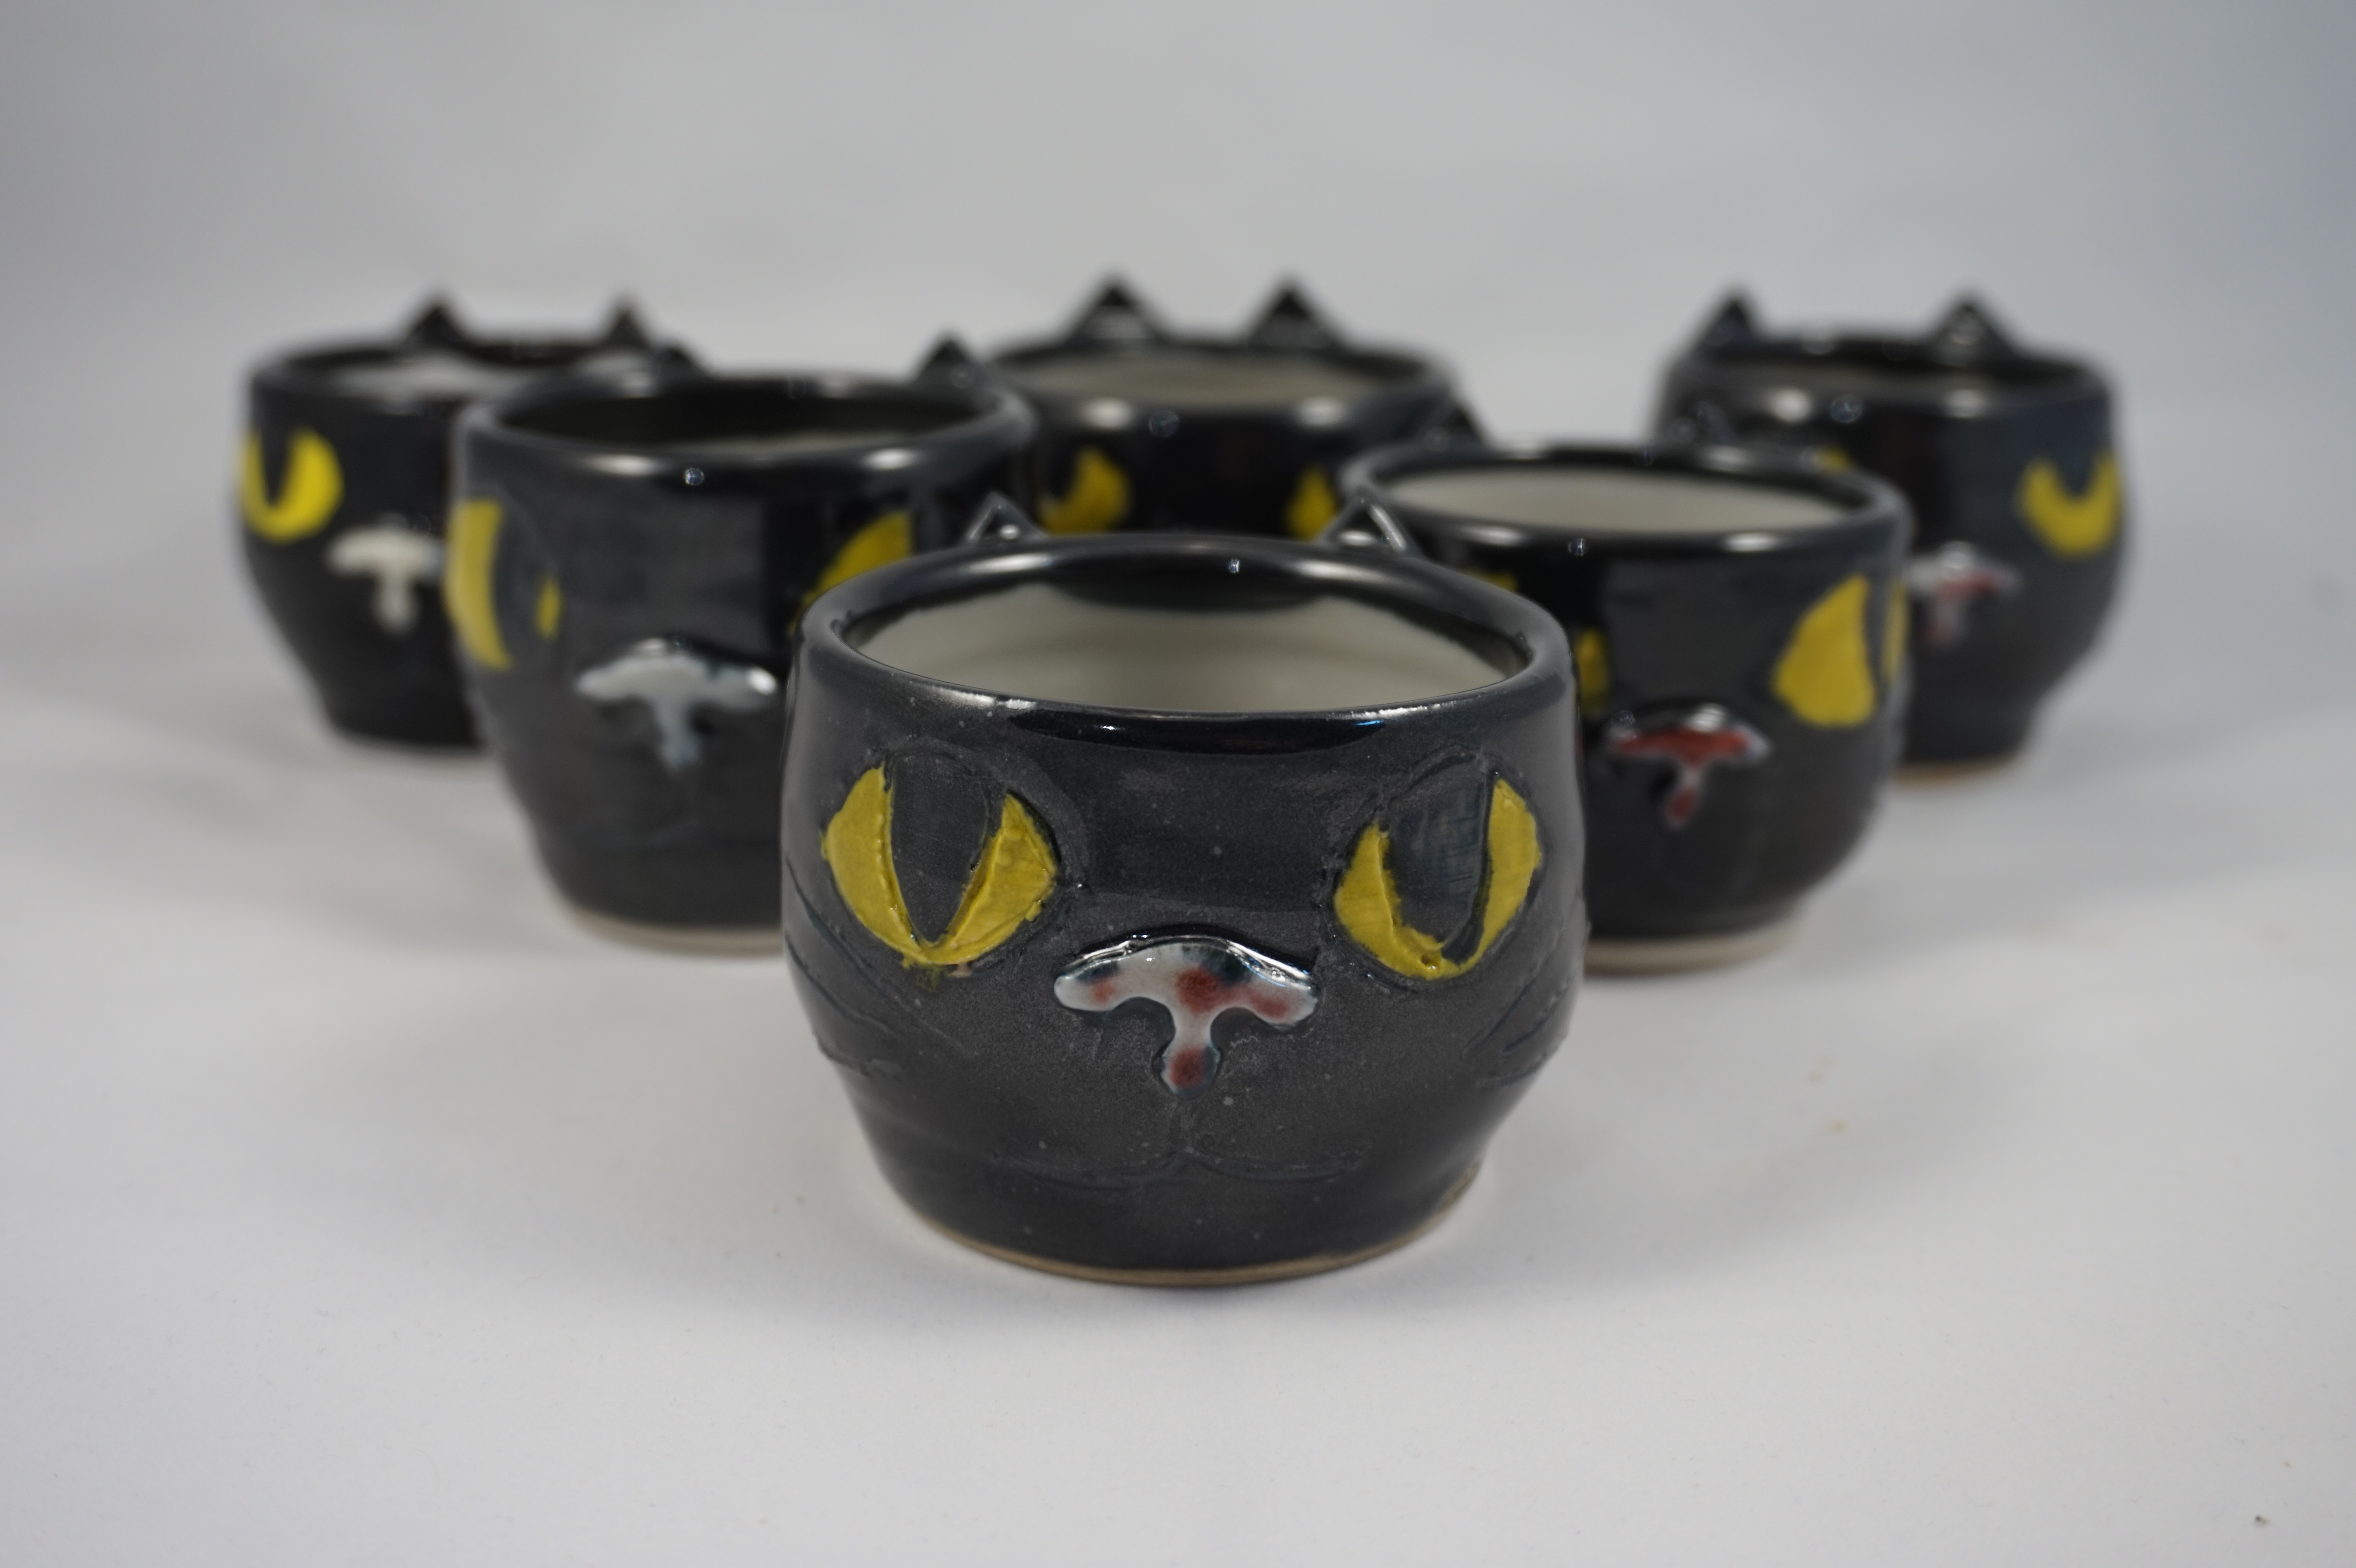 photo of six kitten cups in a triange